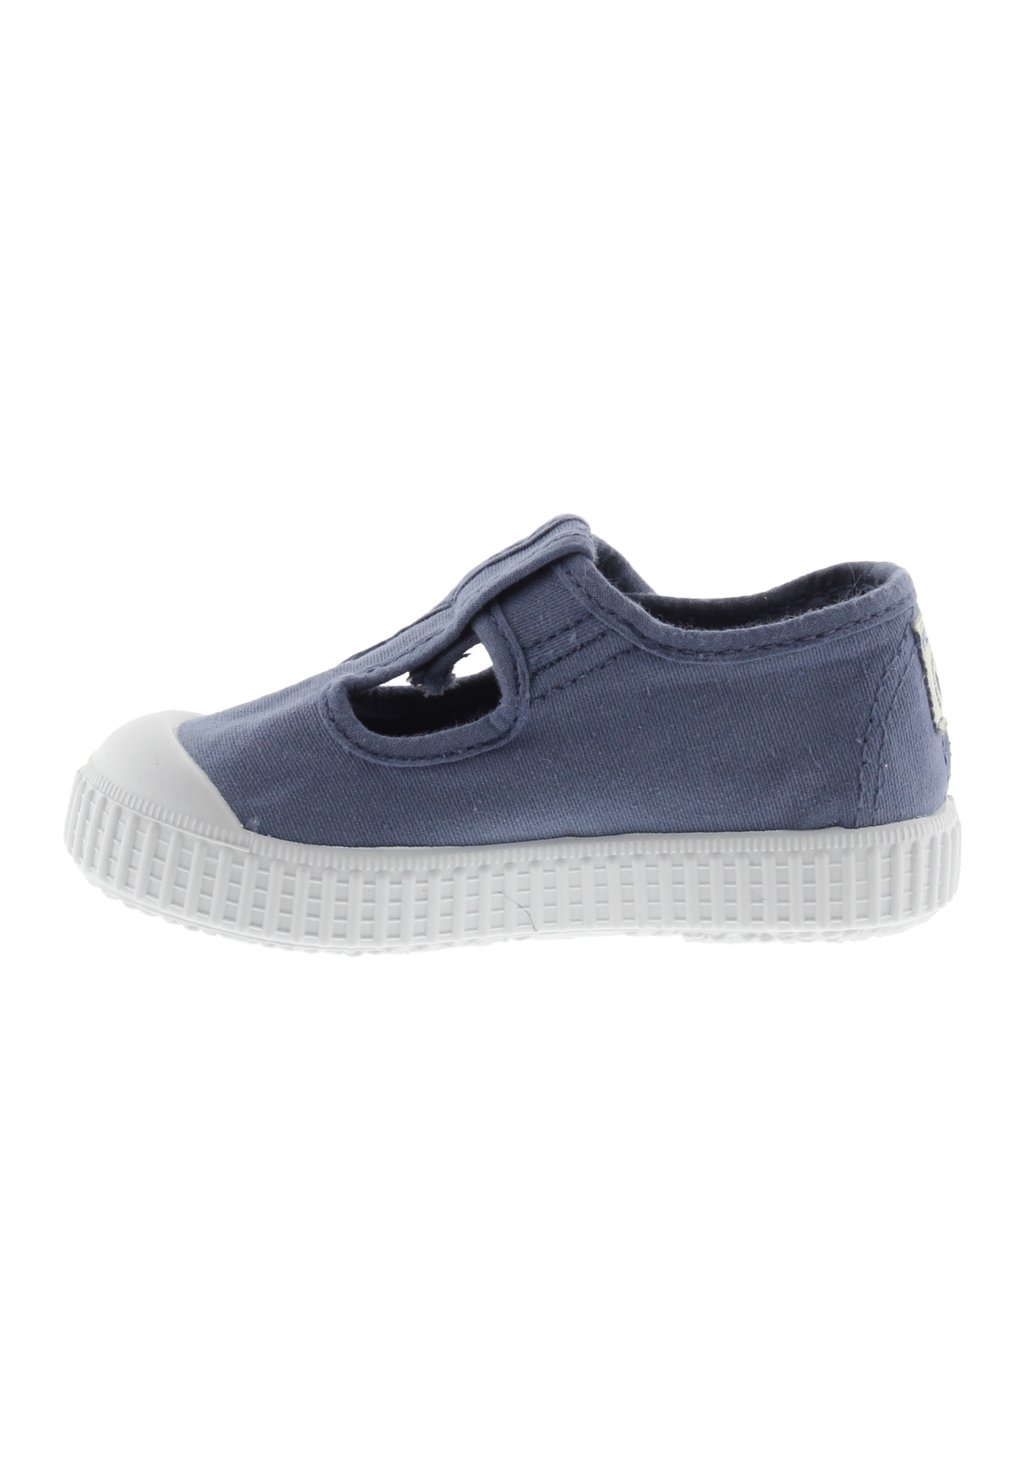 Кроссовки низкие LONA MARINO Victoria Shoes, цвет azul кроссовки duuo shoes zapatillas azul marino